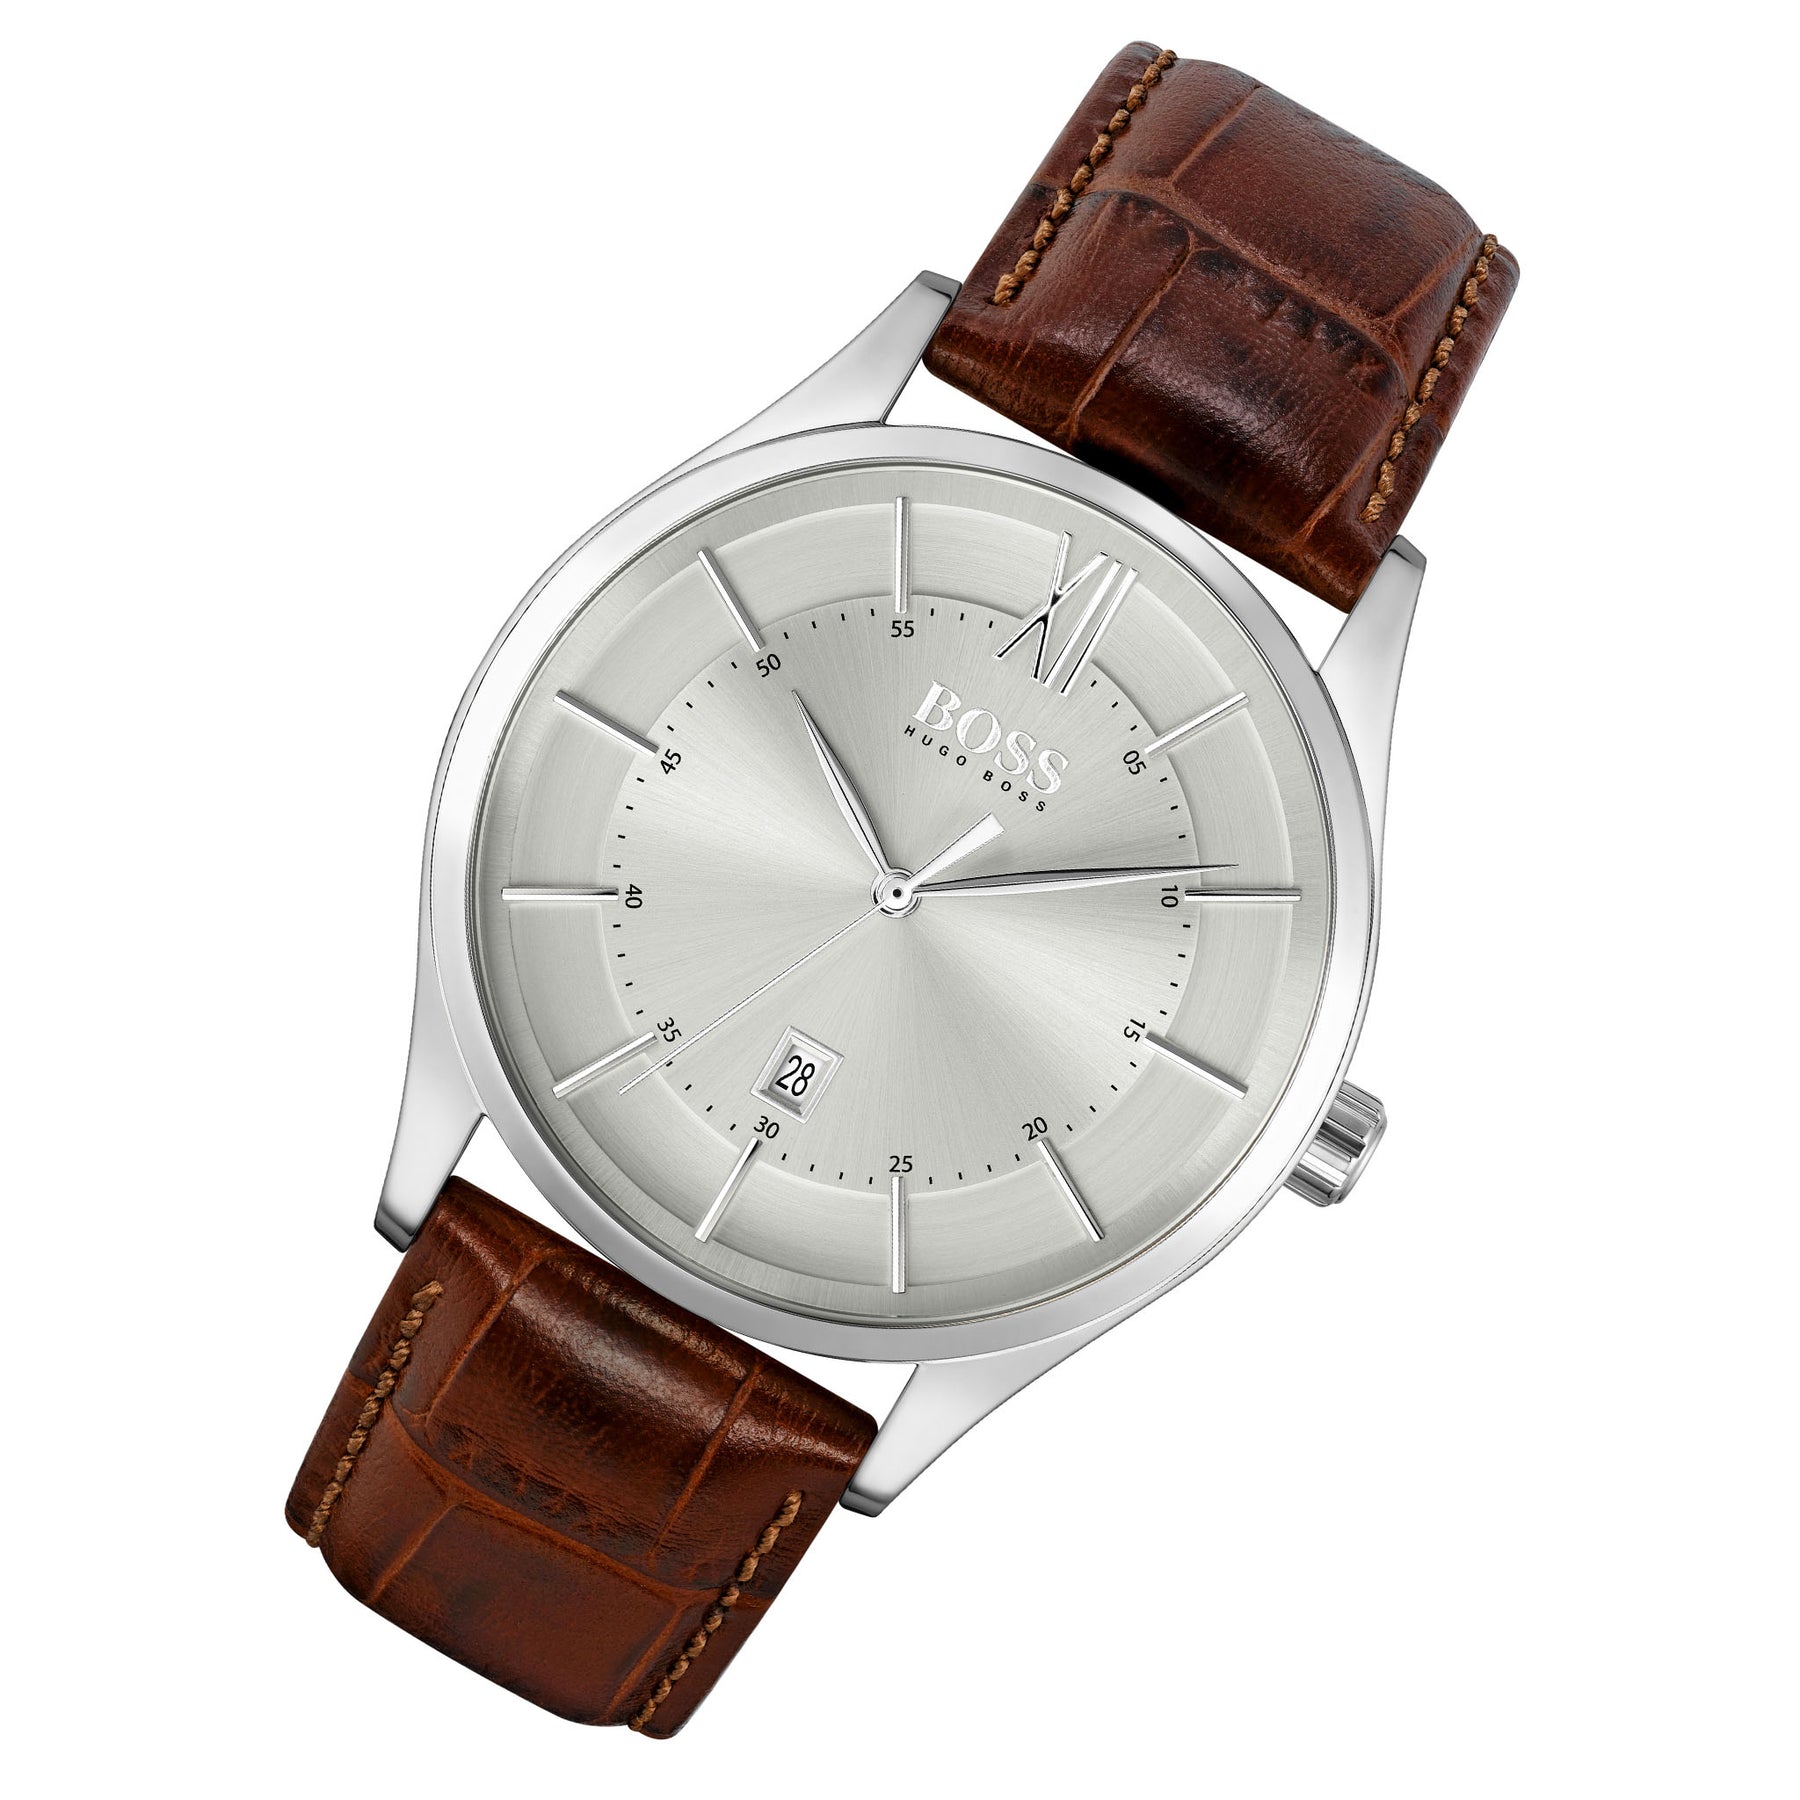 Hugo Boss Distinction Brown Leather Men\'s Watch - 1513795 – The Watch  Factory Australia